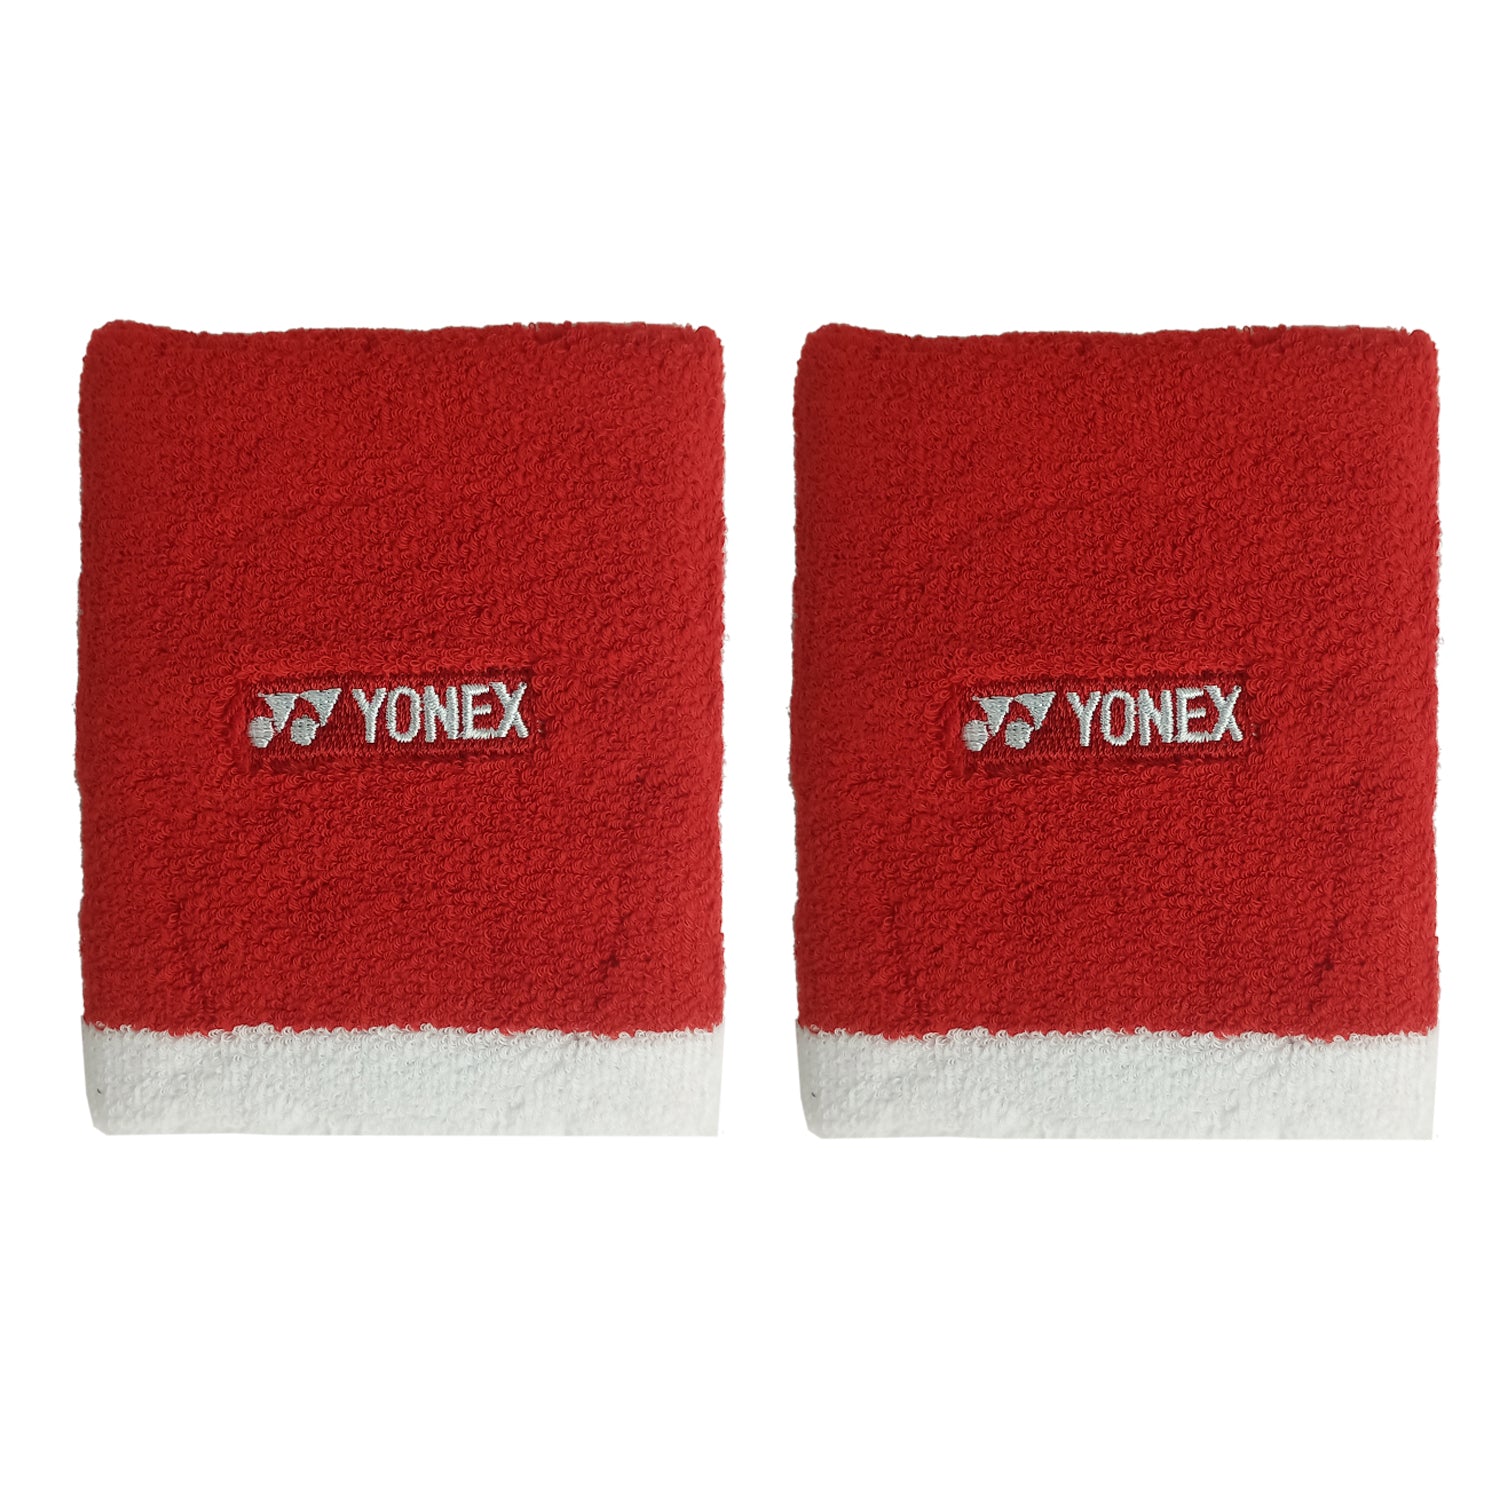 Yonex 11501 Wrist Band, Red/White (Pack of 2) - Best Price online Prokicksports.com